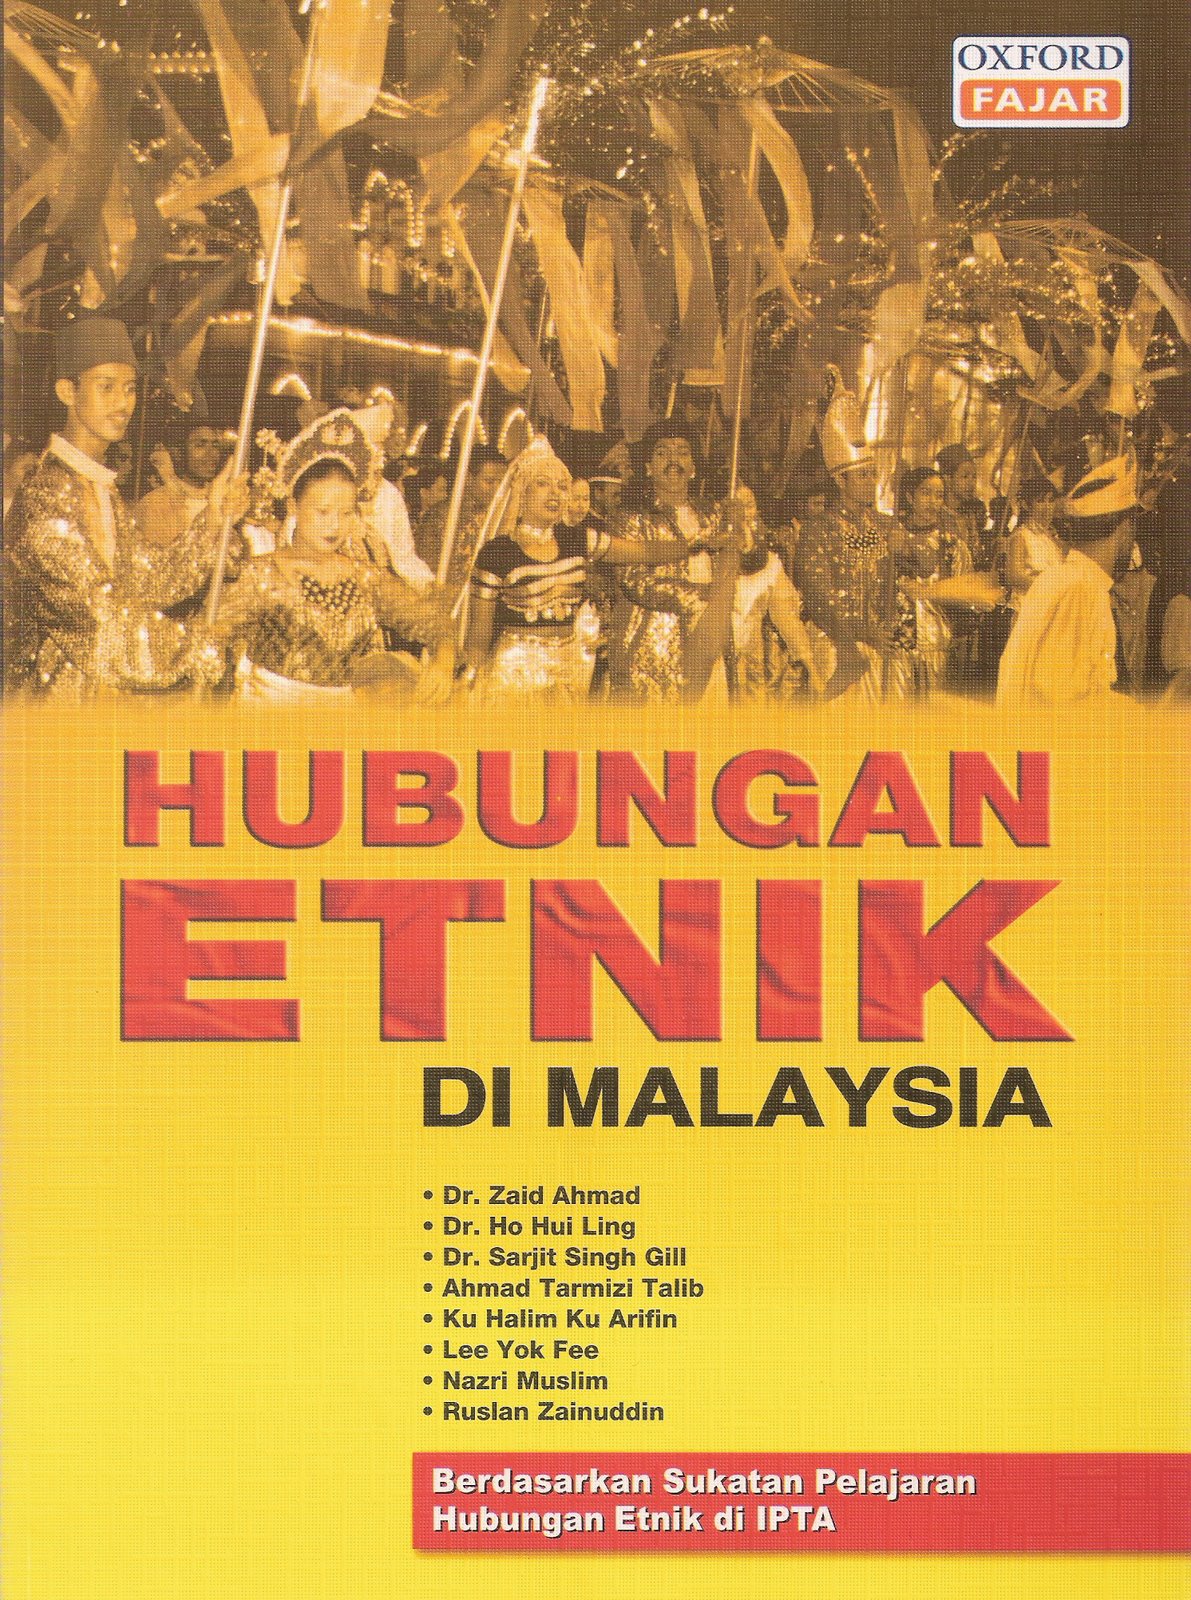 [Hubungan+etnik+di+Malaysia.jpg]